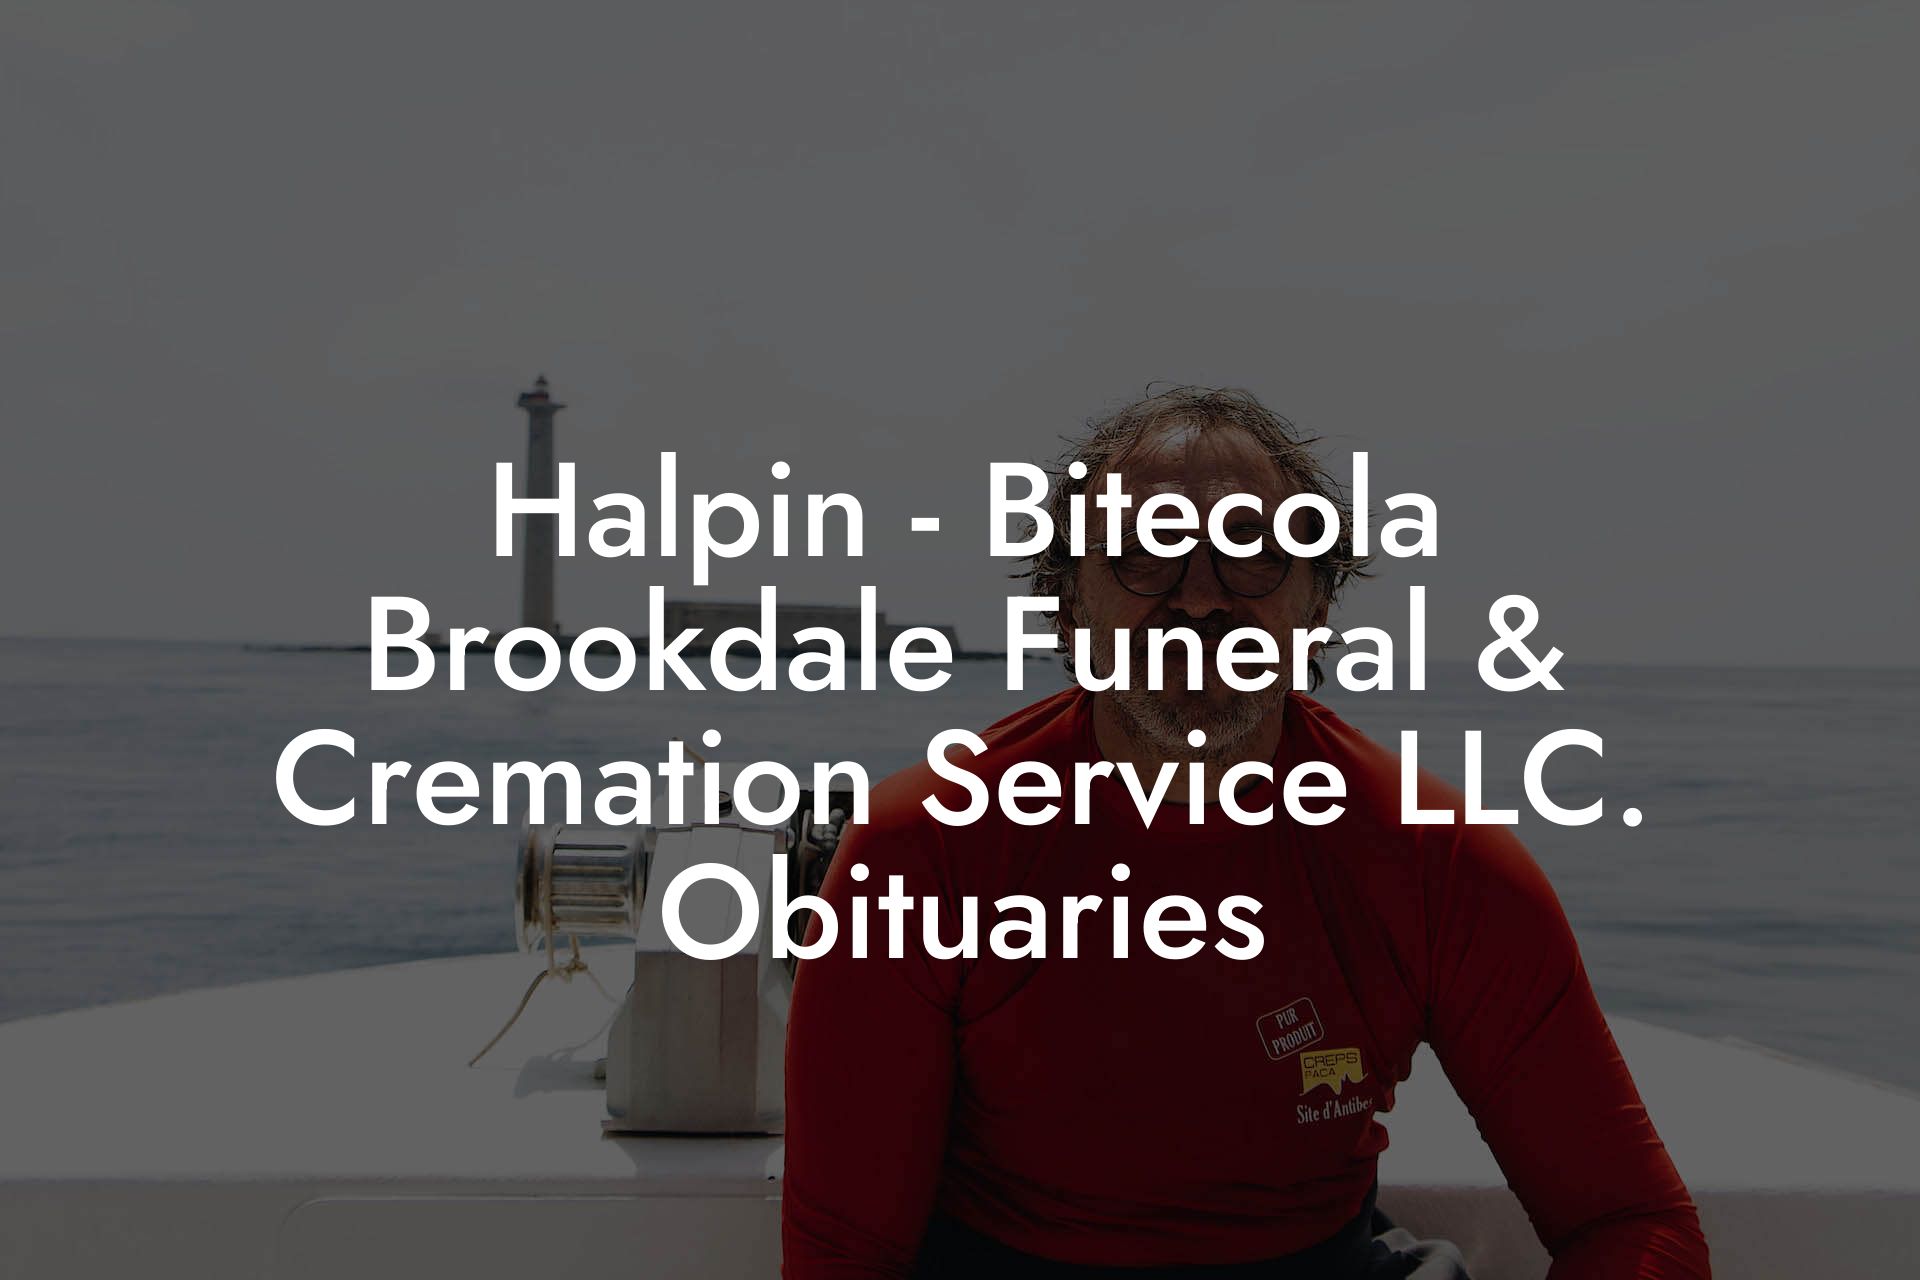 Halpin - Bitecola Brookdale Funeral & Cremation Service LLC. Obituaries